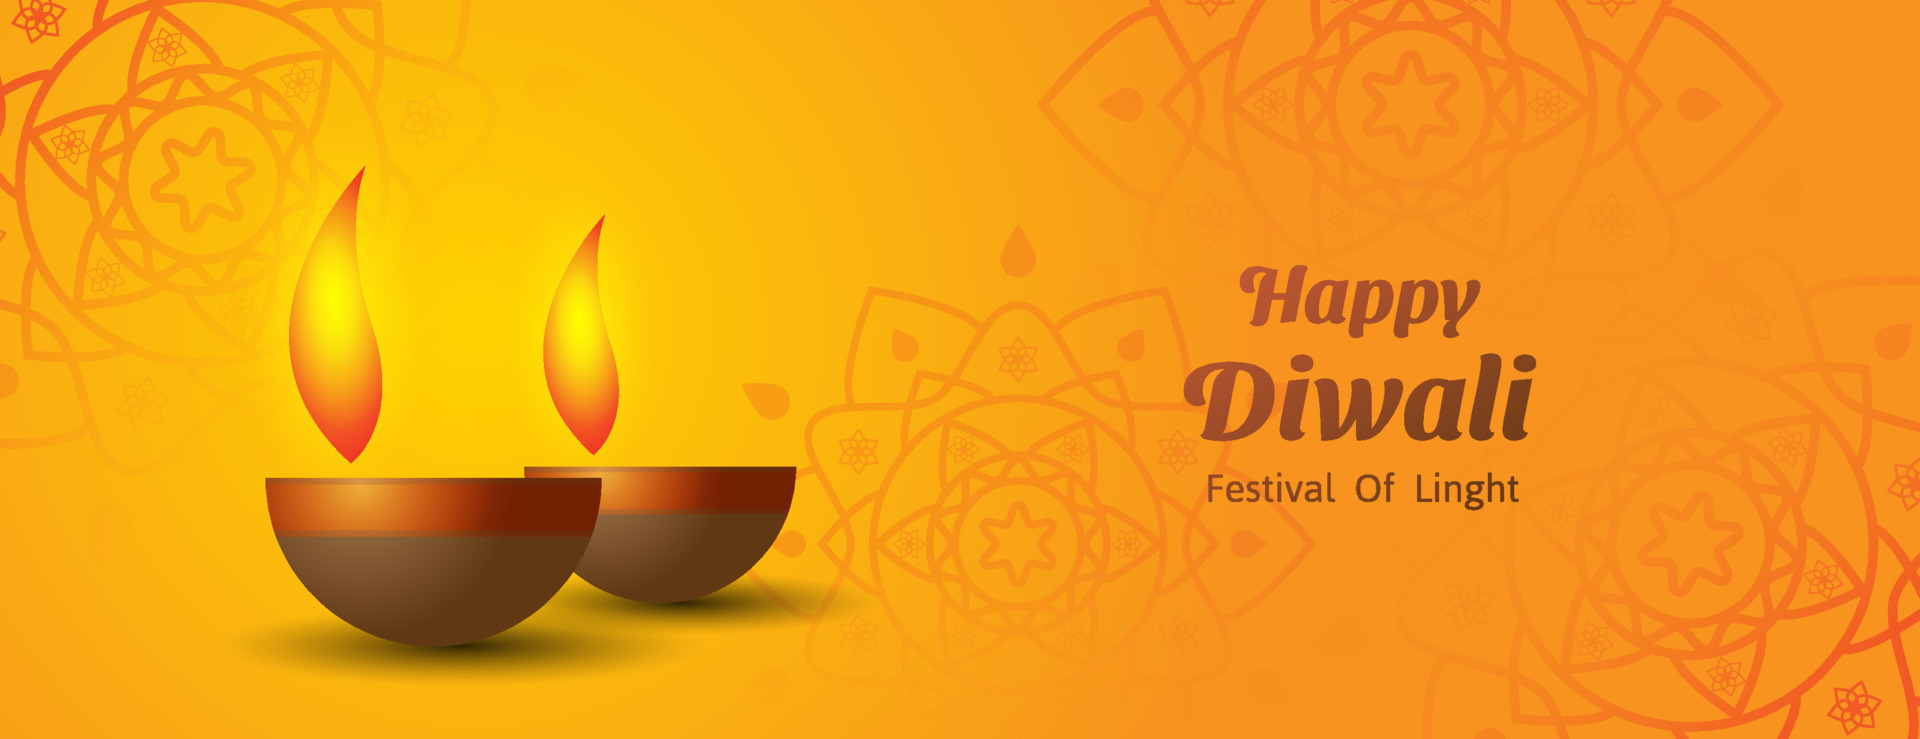 happy diwali banner background. festival of lights banner design. vector  illustration 11008869 Vector Art at Vecteezy